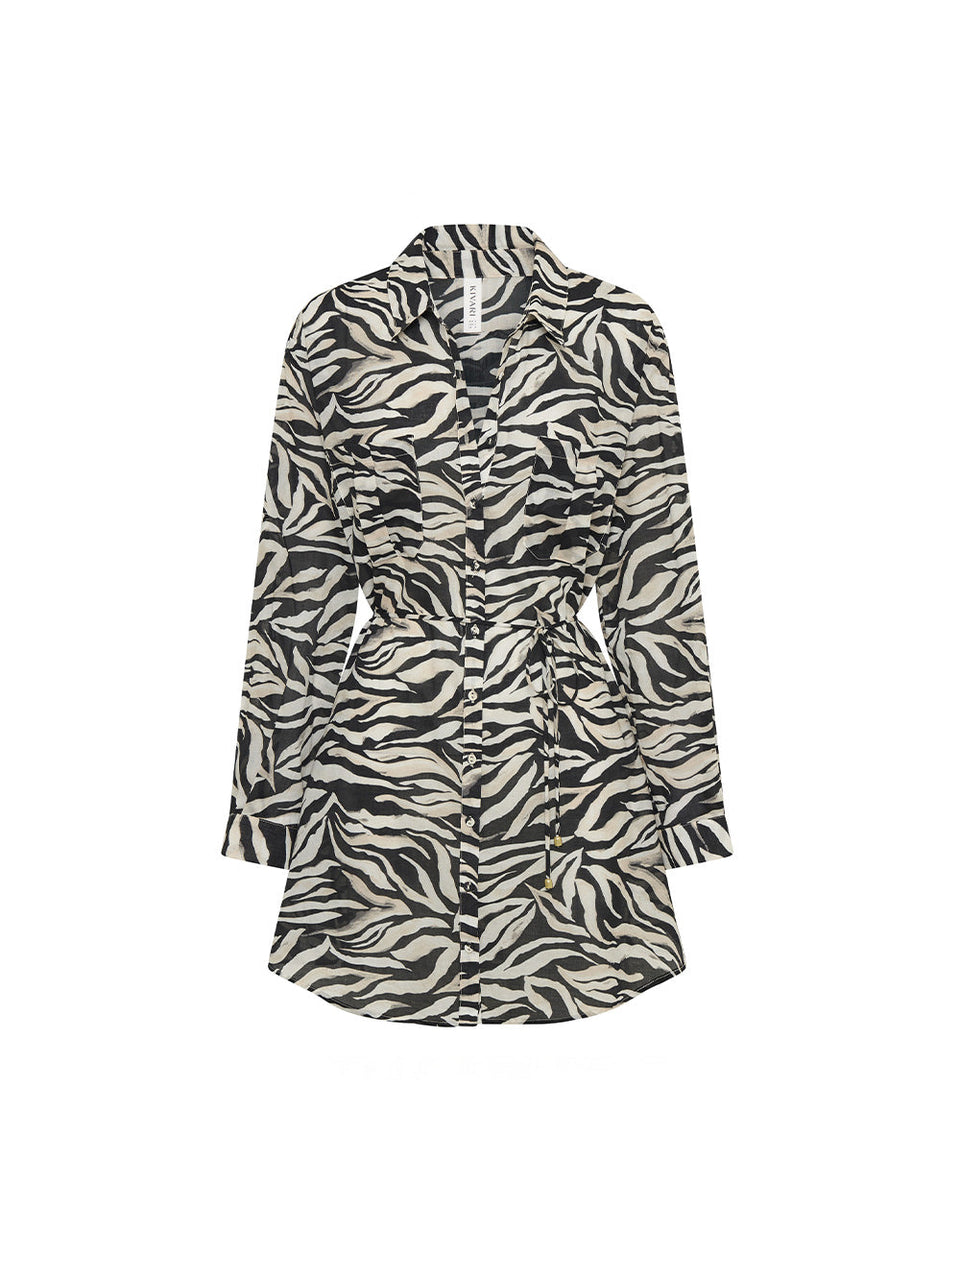 Zenya Overswim Shirt Dress KIVARI | Zebra printed overswim shirt dress